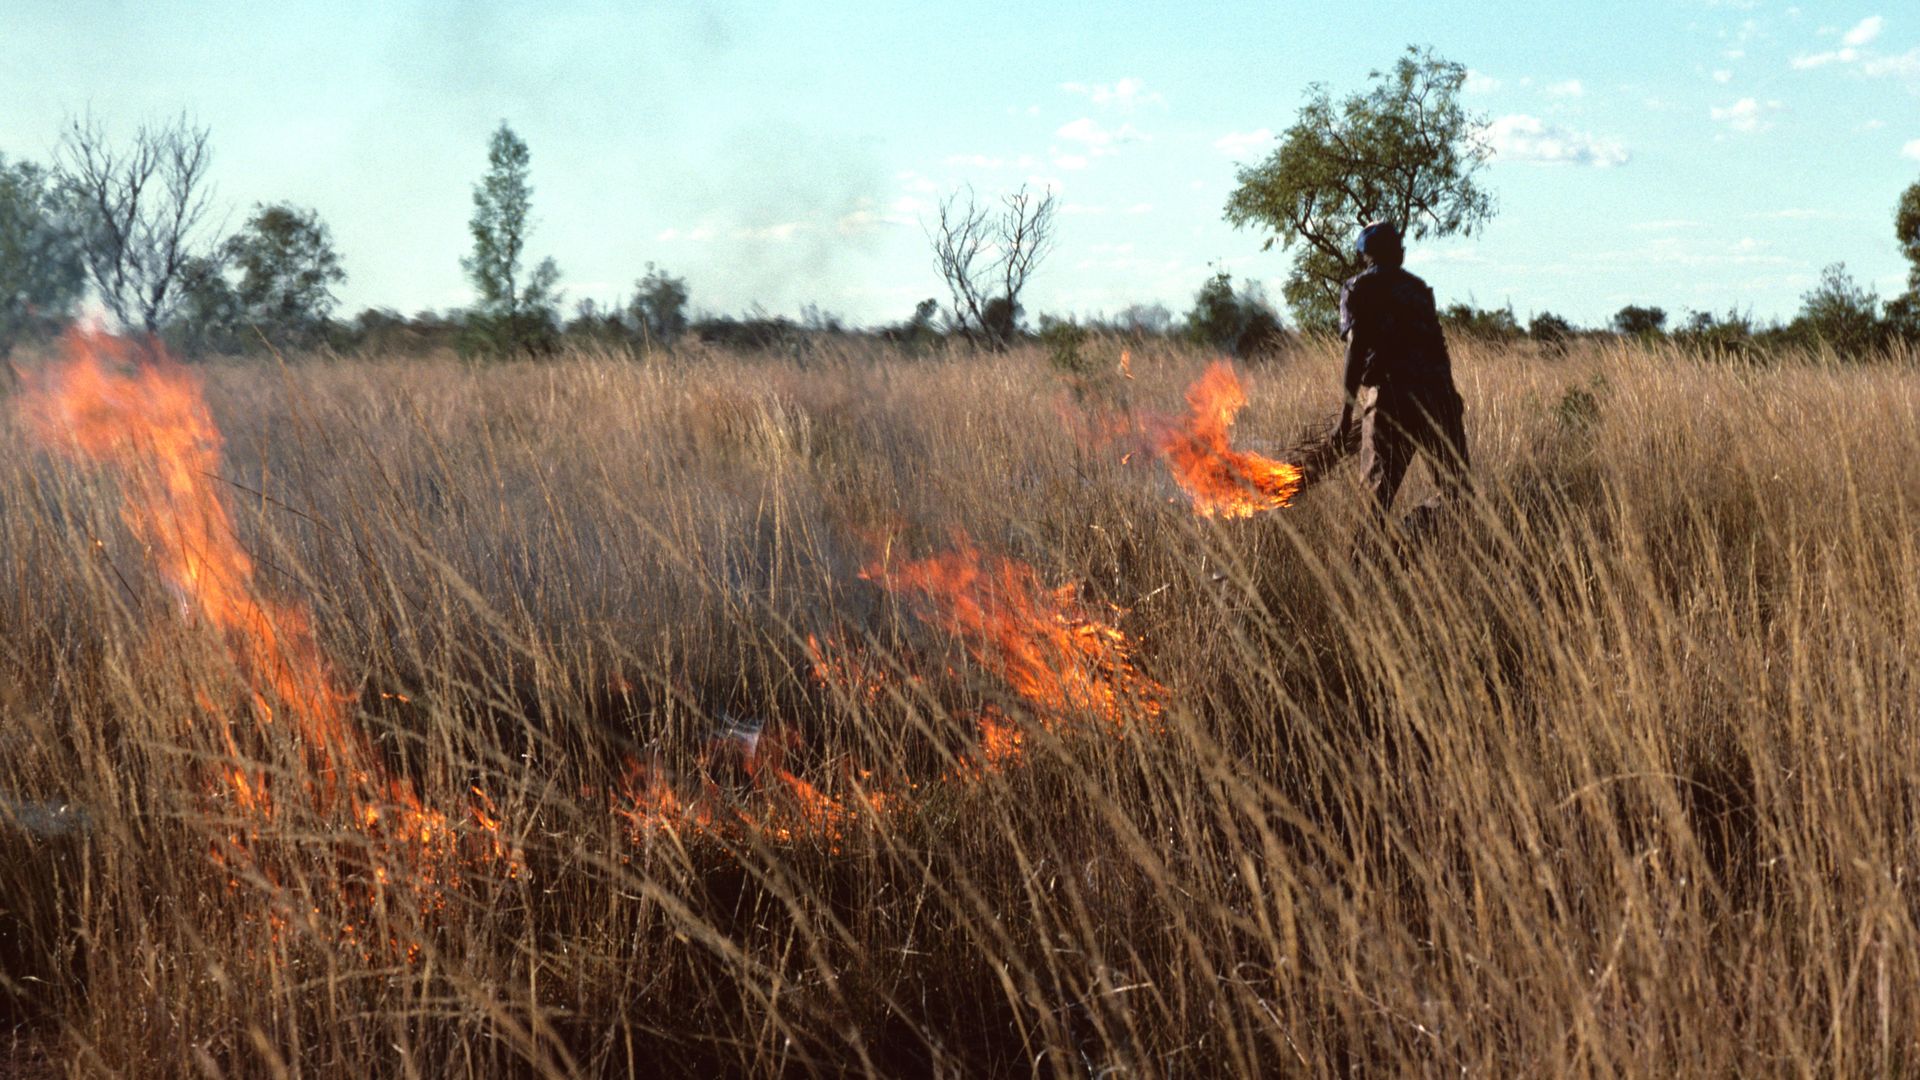 Warlpiri people burning spinifex to promote growth. Tanami Desert, Northern Territory, Australia.